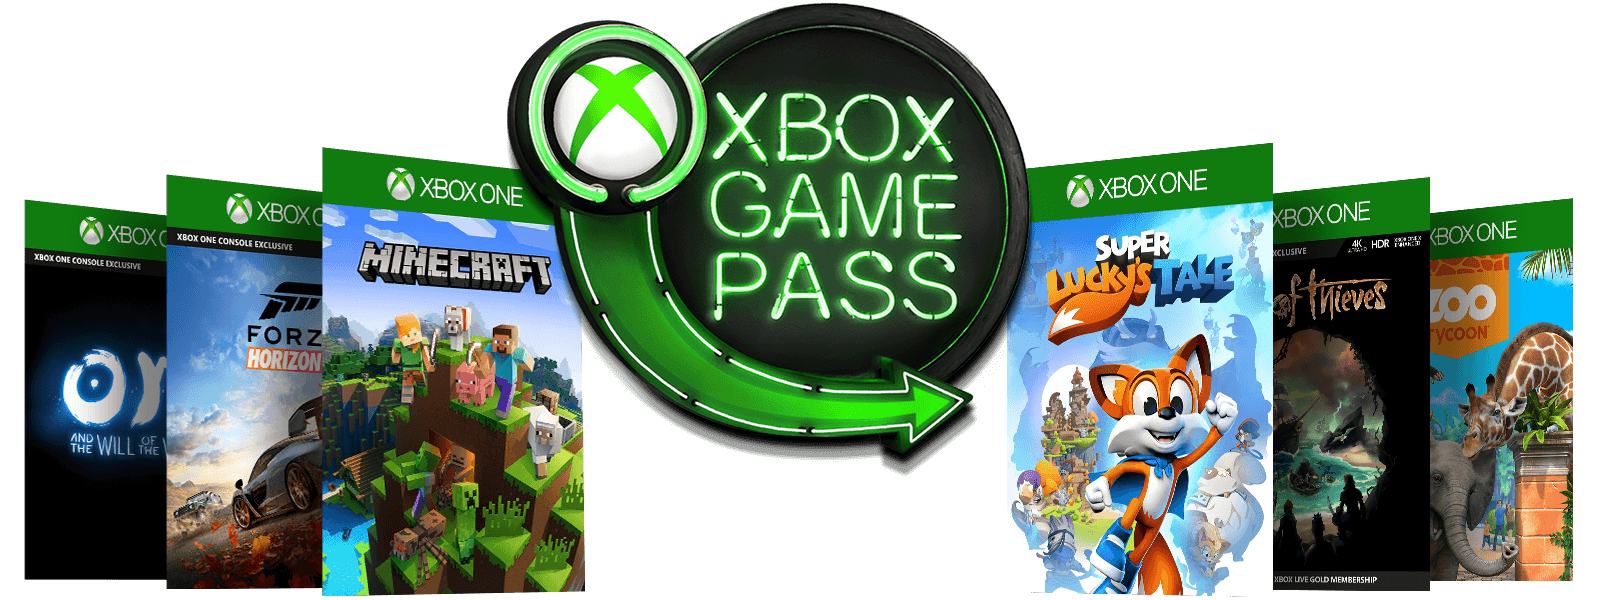 xbox game pass cross platform games